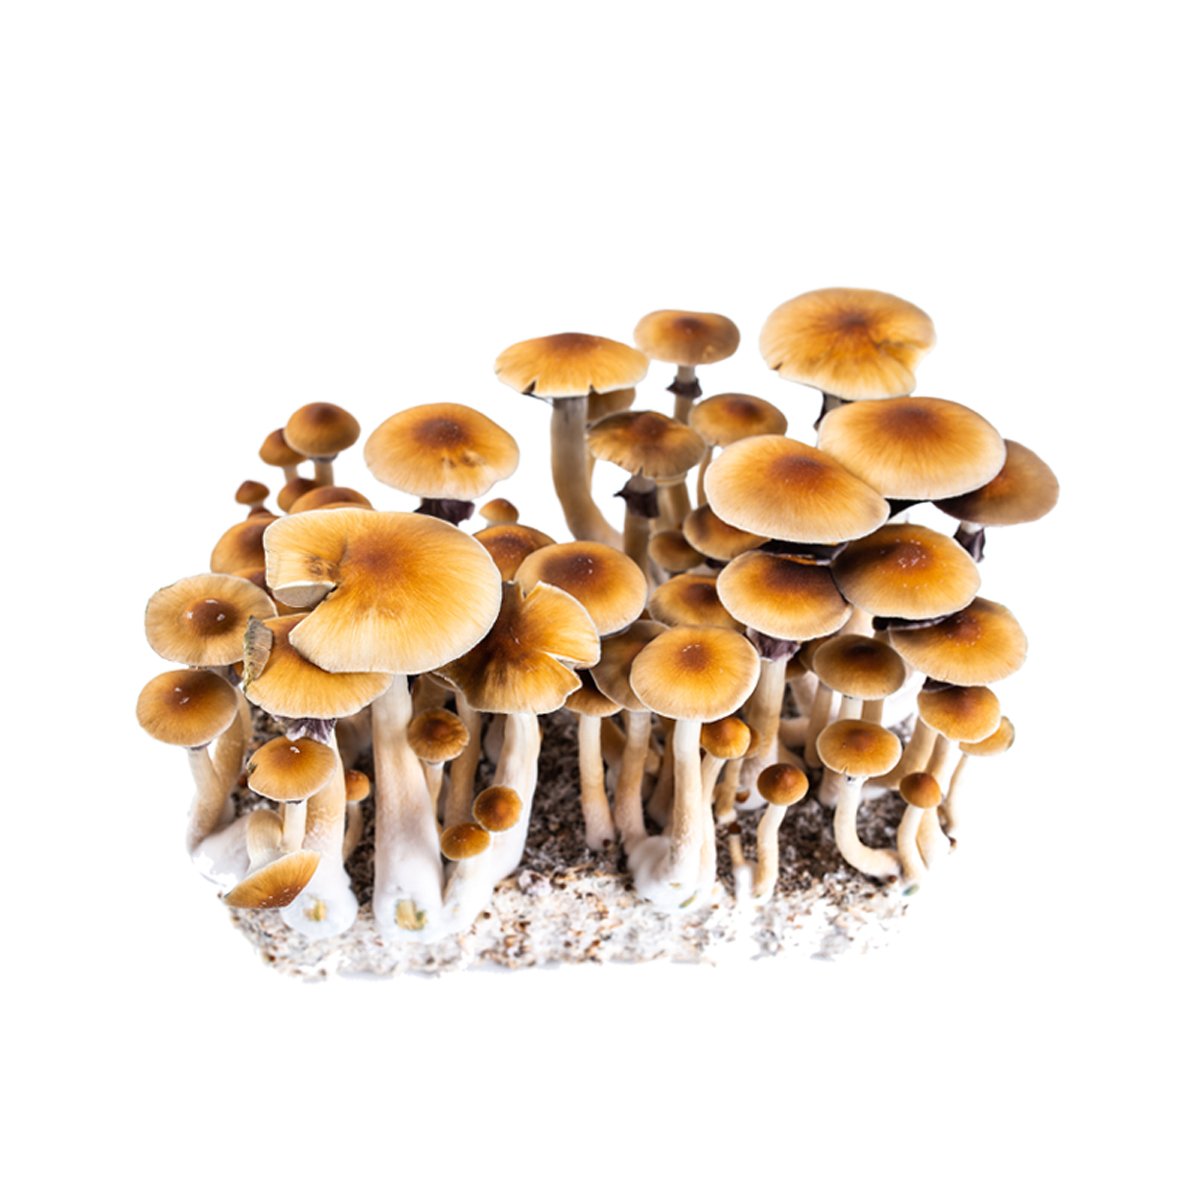 Golden Teacher Mushrooms - Psychedelic Magic Mushroom Strain